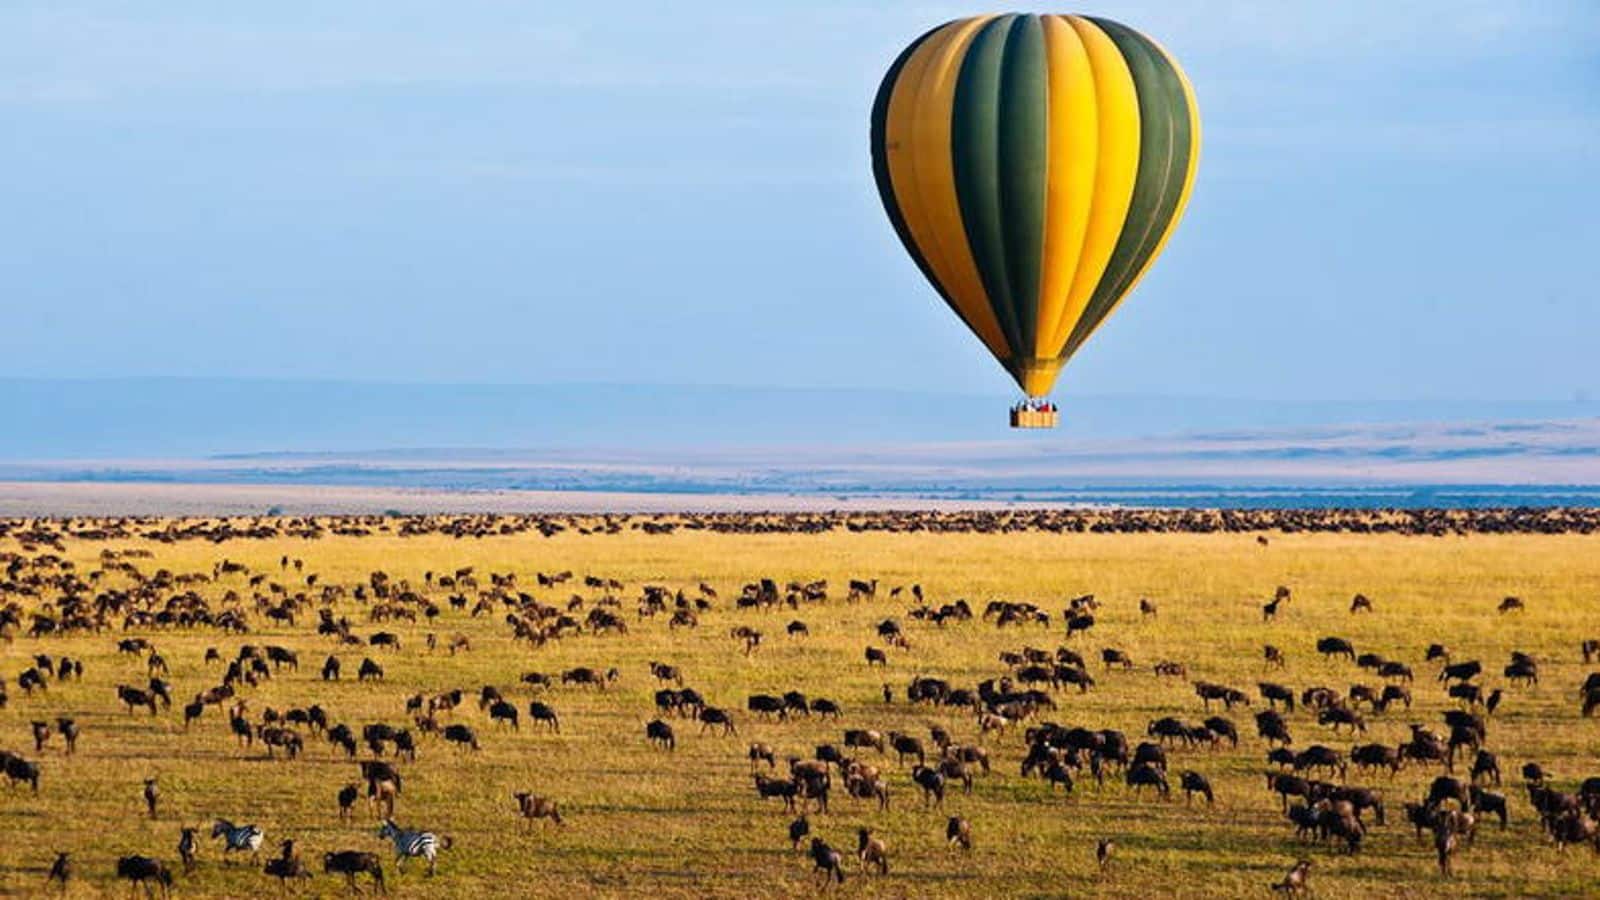 Serengeti balloon safari: Witness Tanzania's aerial adventure